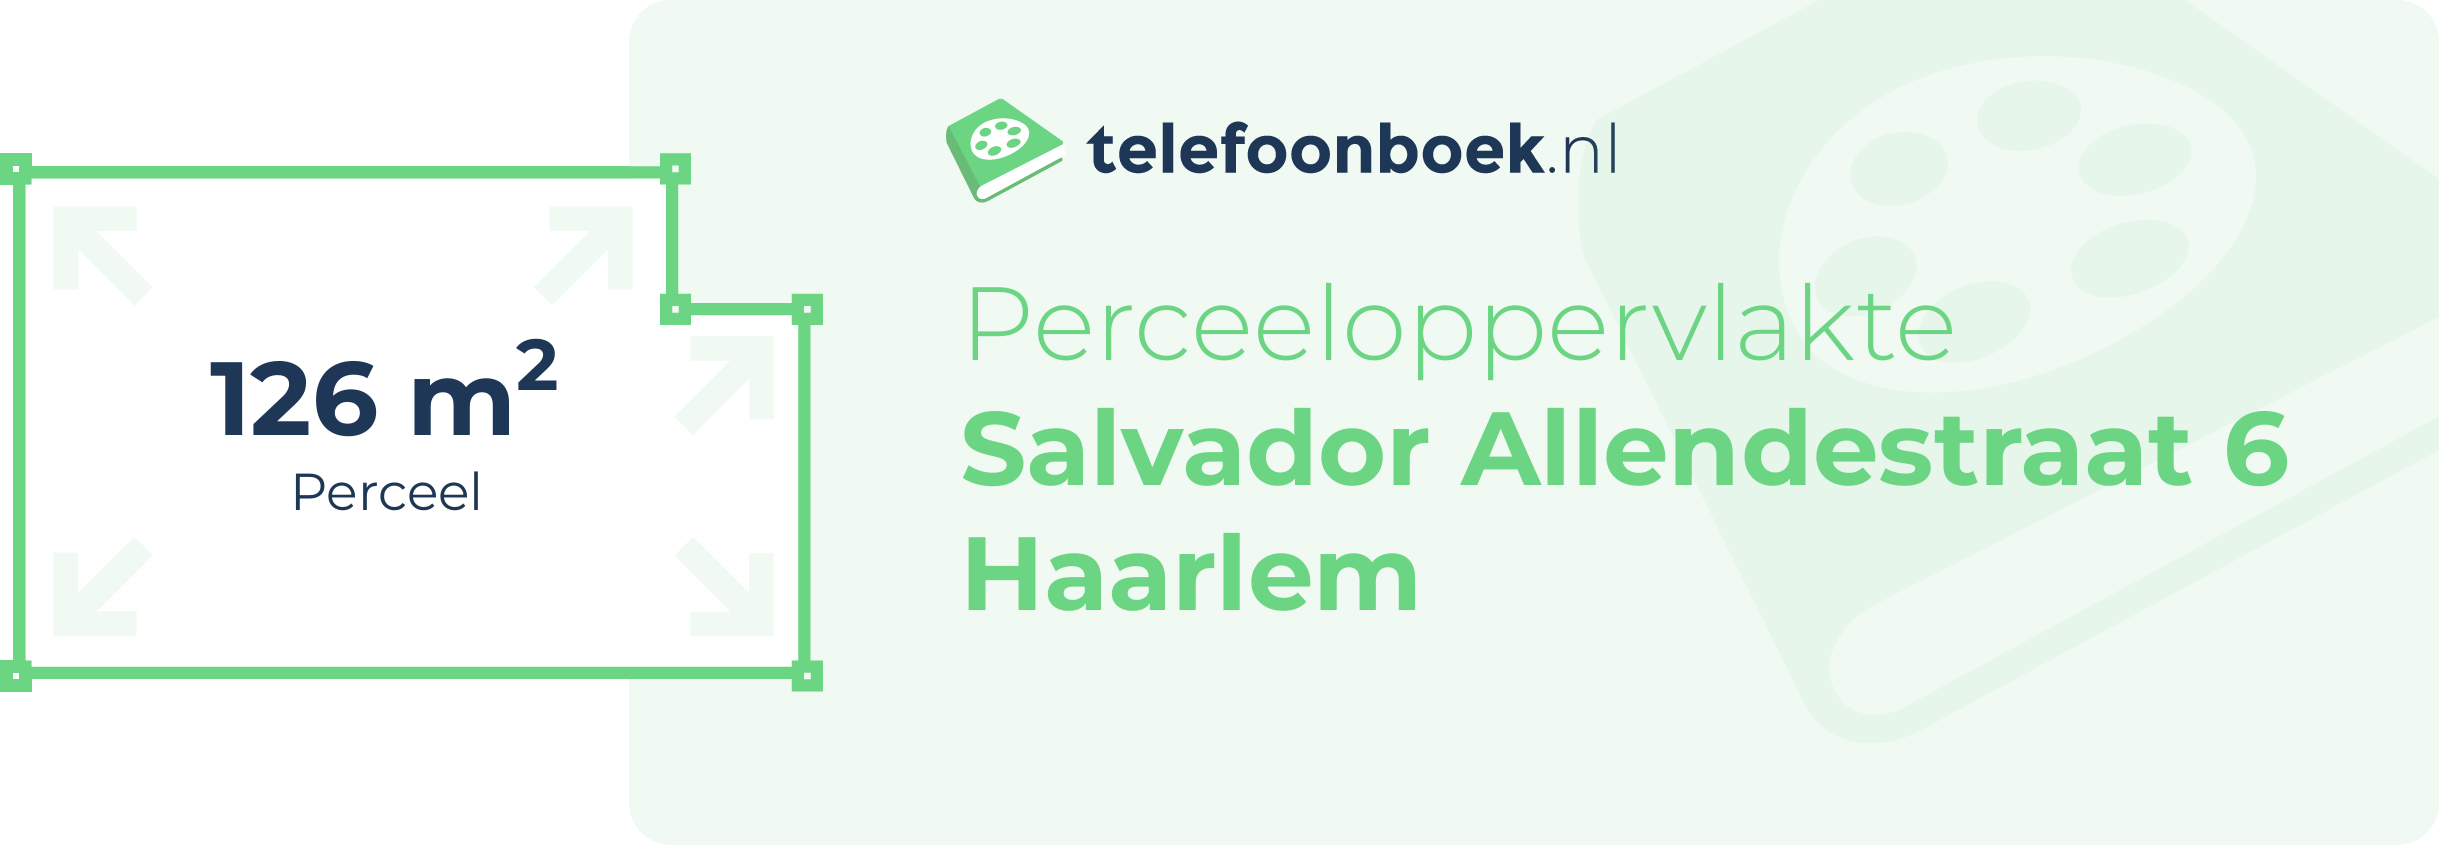 Perceeloppervlakte Salvador Allendestraat 6 Haarlem